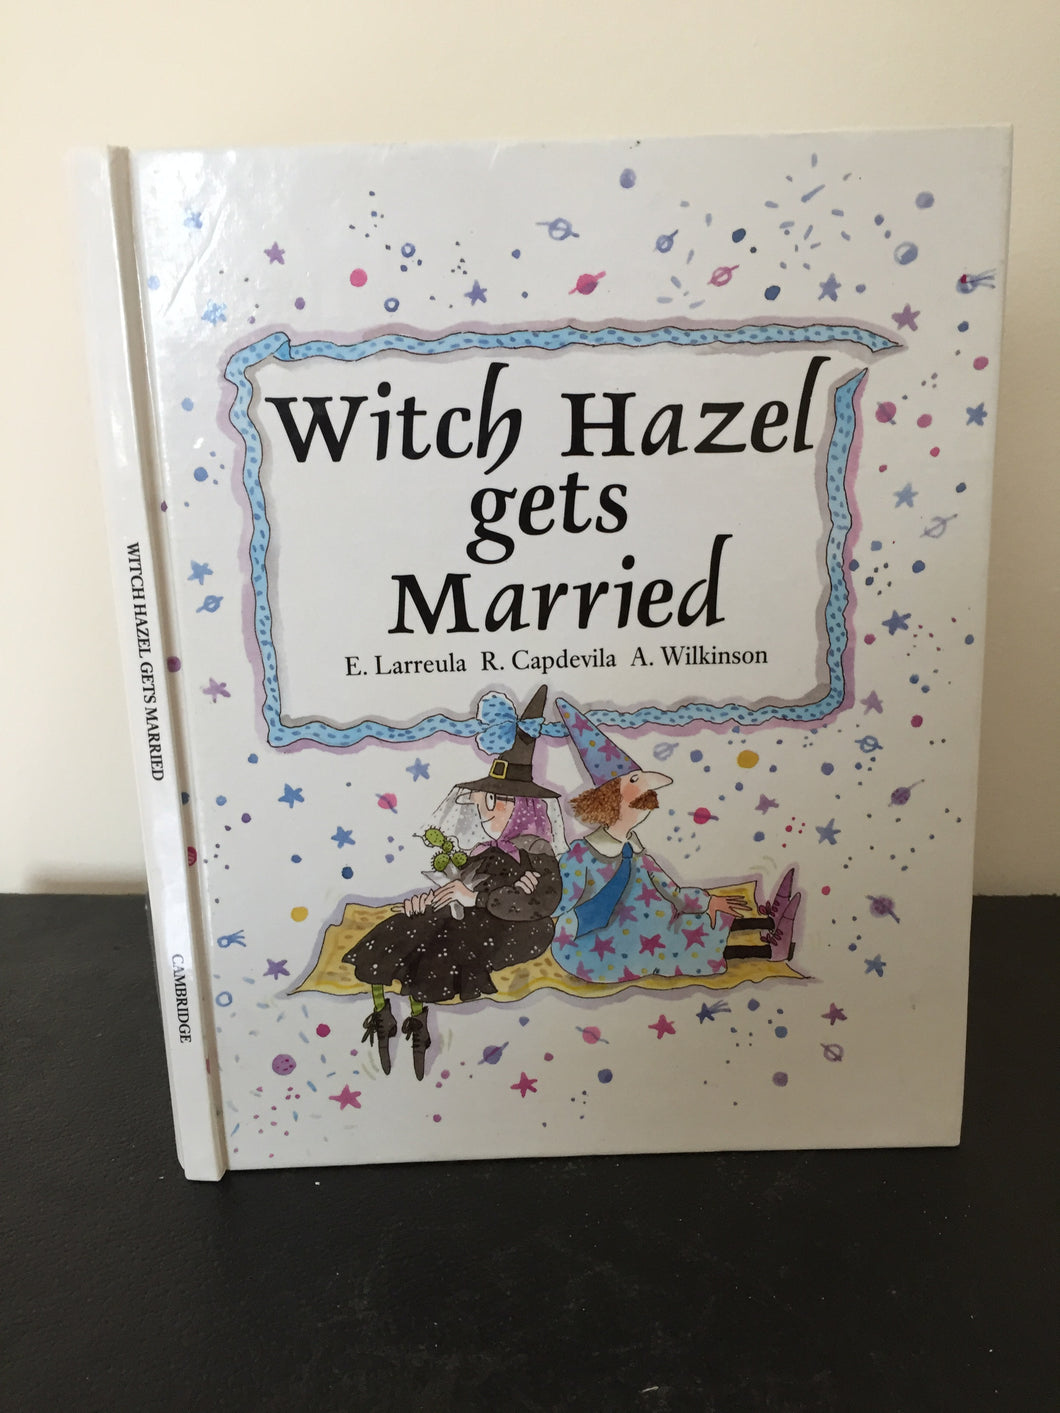 Witch Hazel gets Married